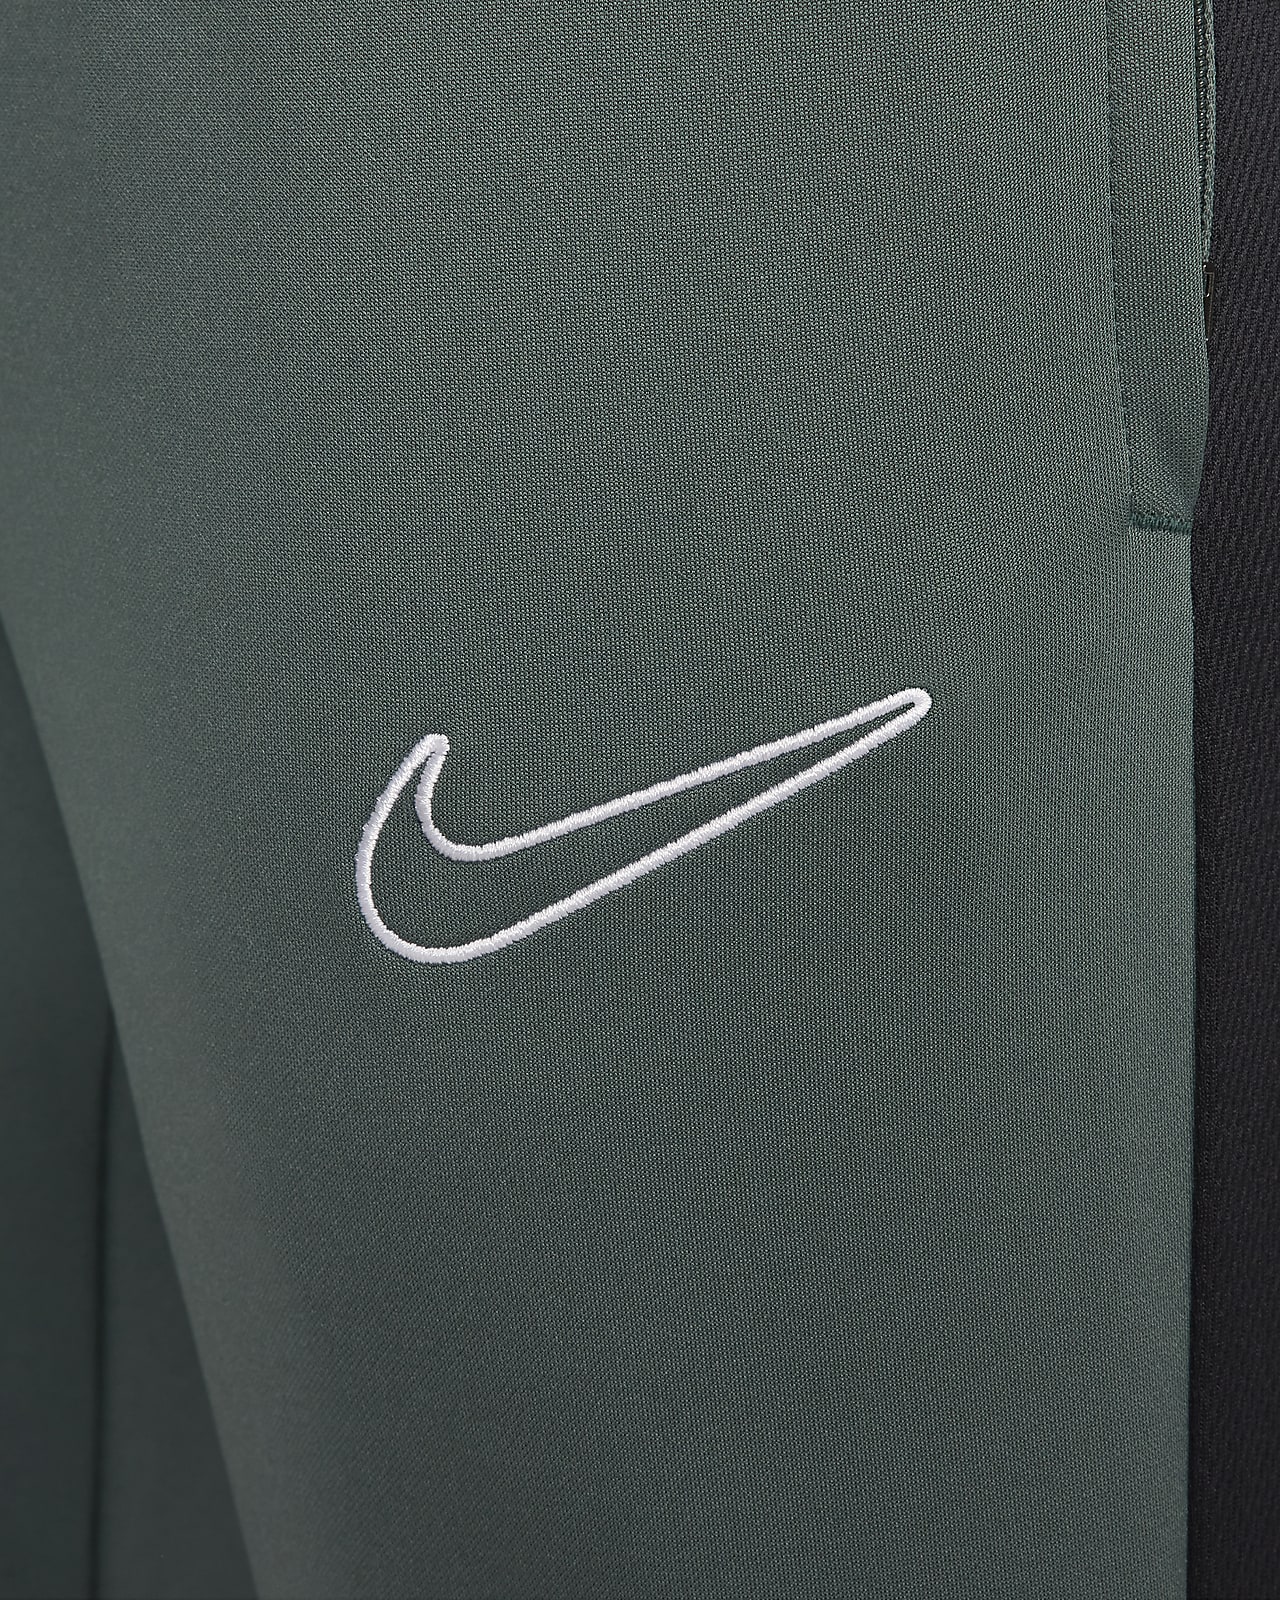 Nike Soccer Dri-FIT Academy polyknit pants in navy